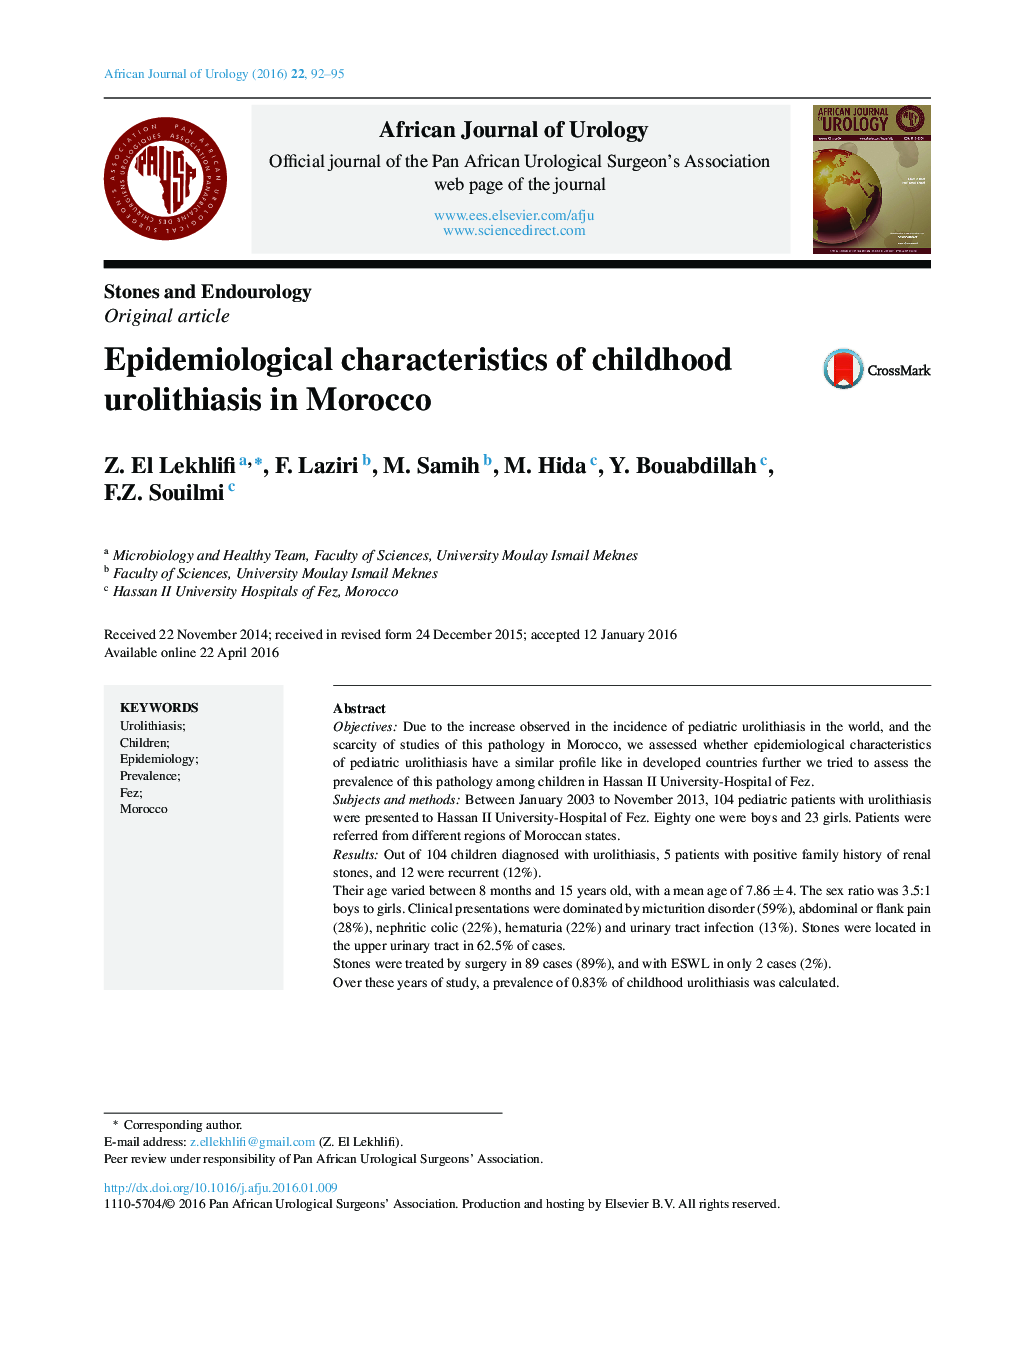 Epidemiological characteristics of childhood urolithiasis in Morocco 